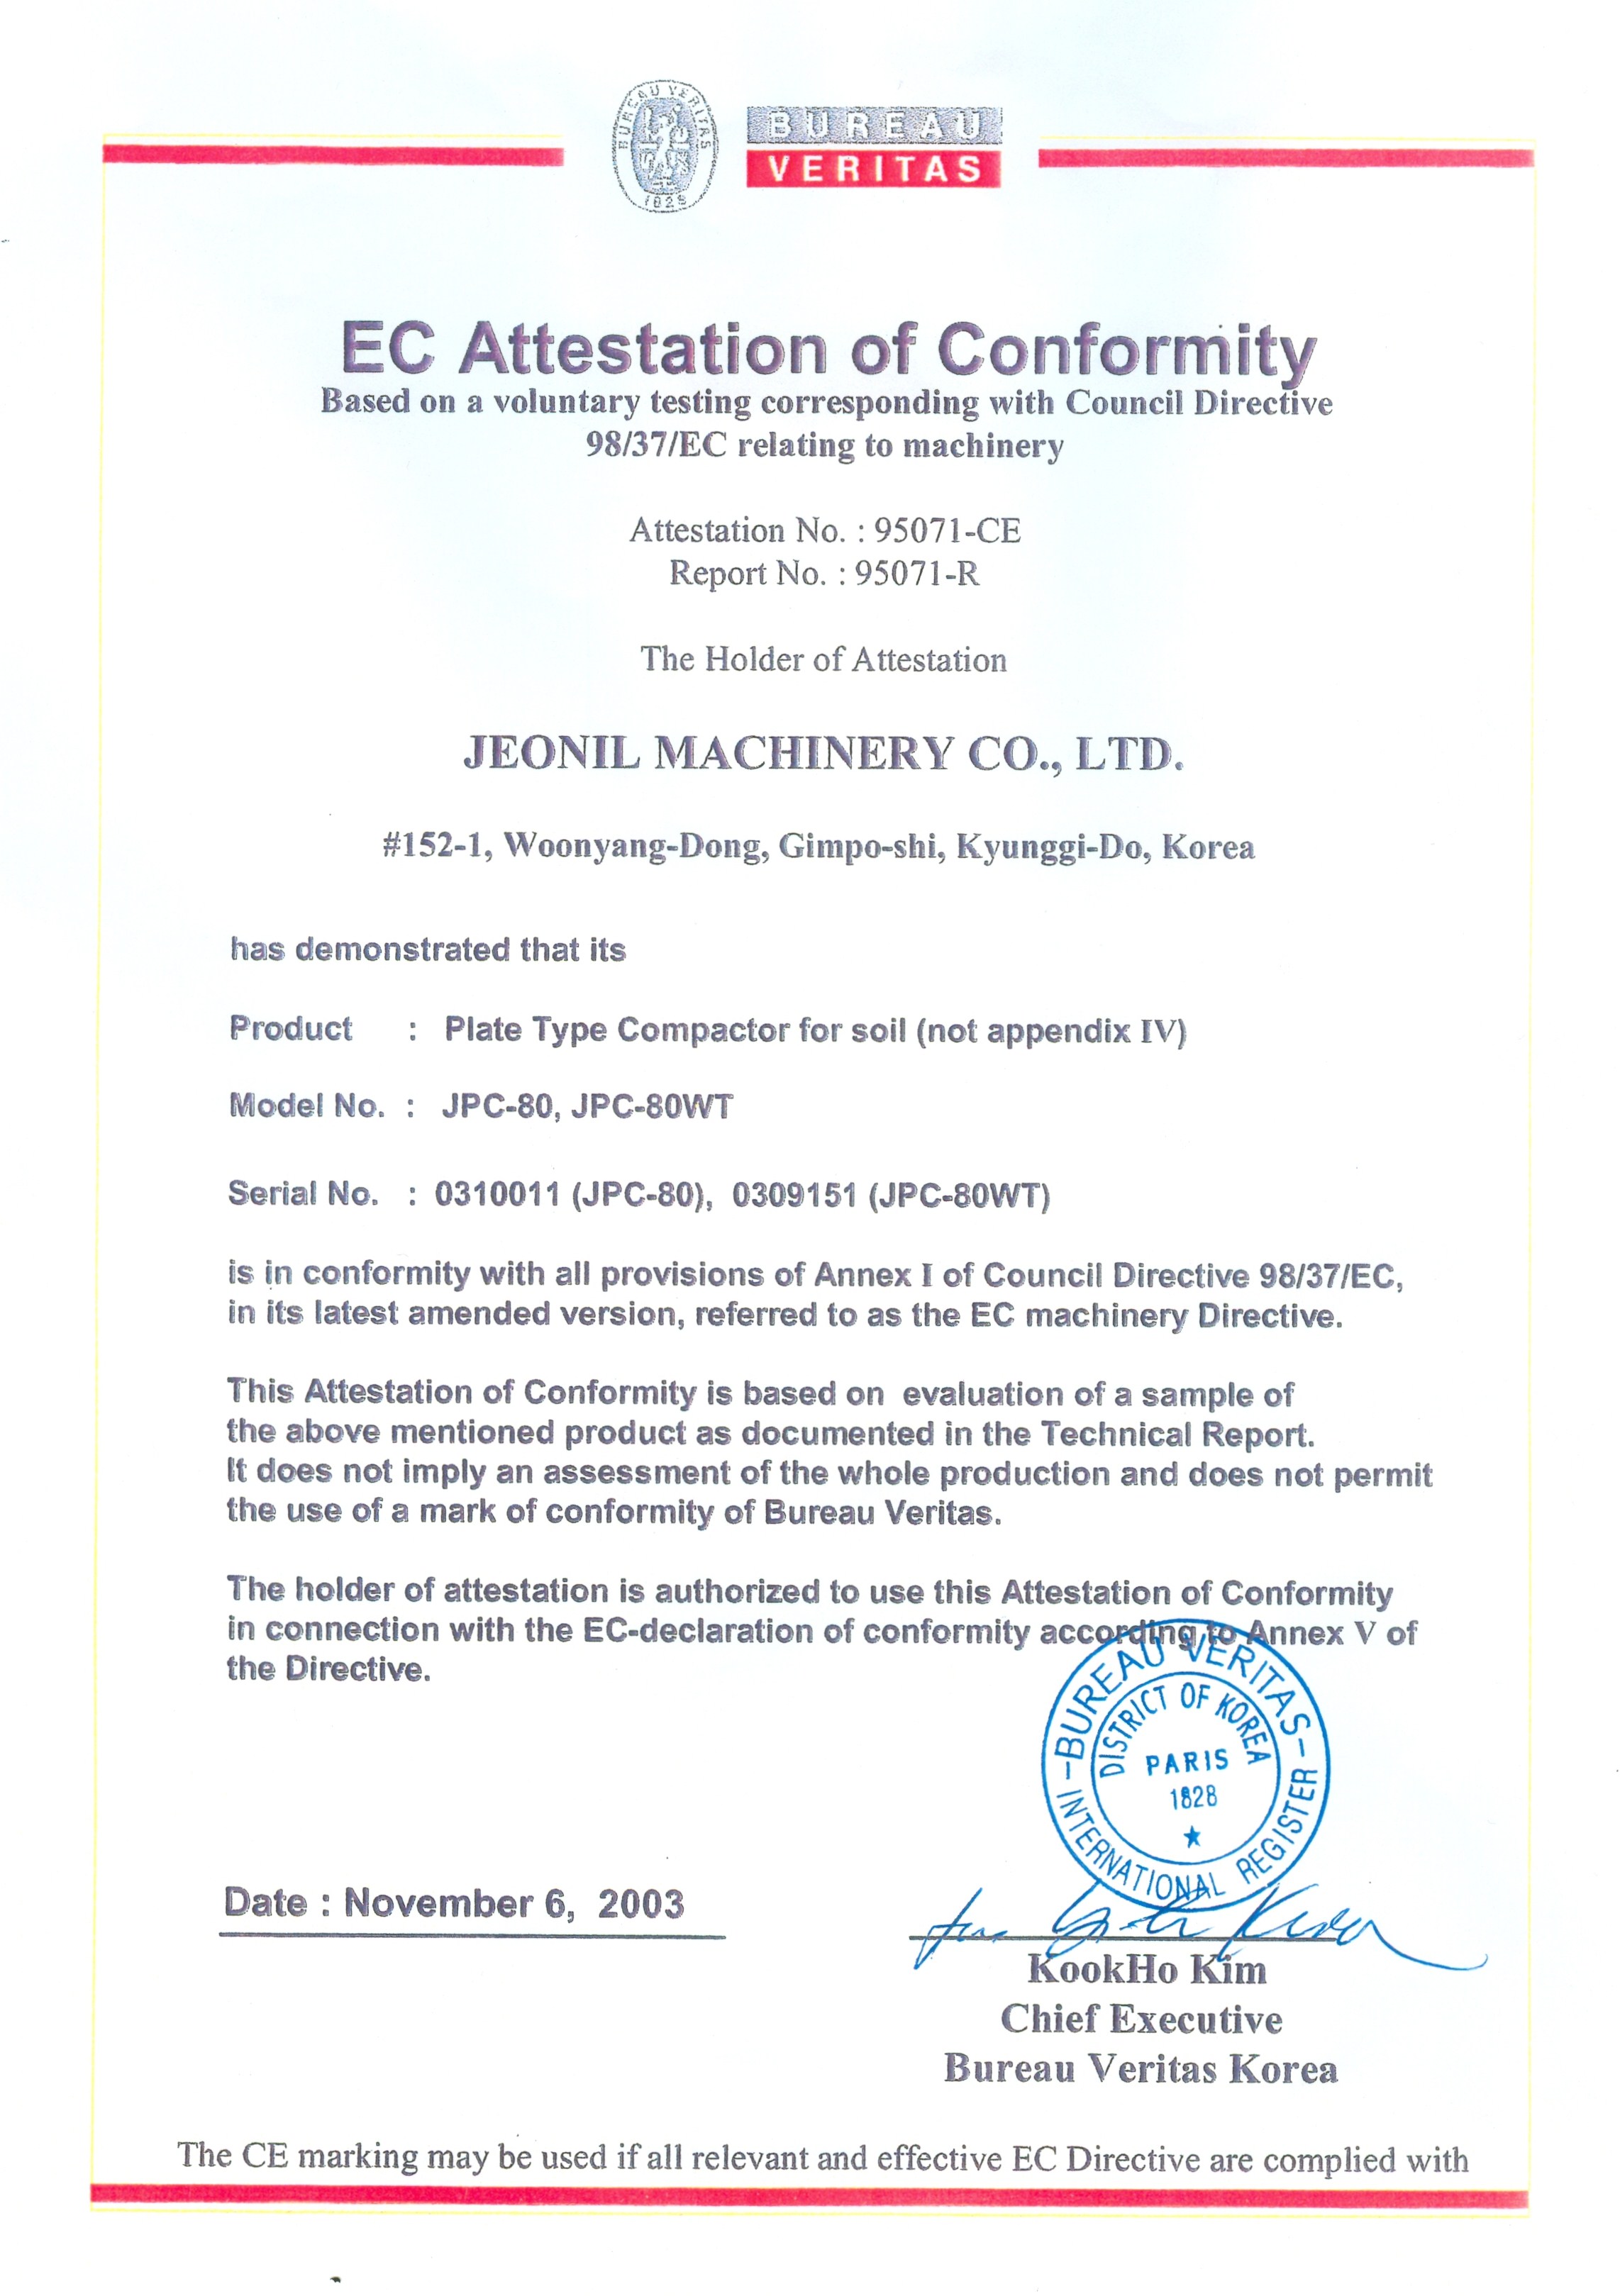 CE Certificate for JPC-80&80WT Plate Compactor.jpg